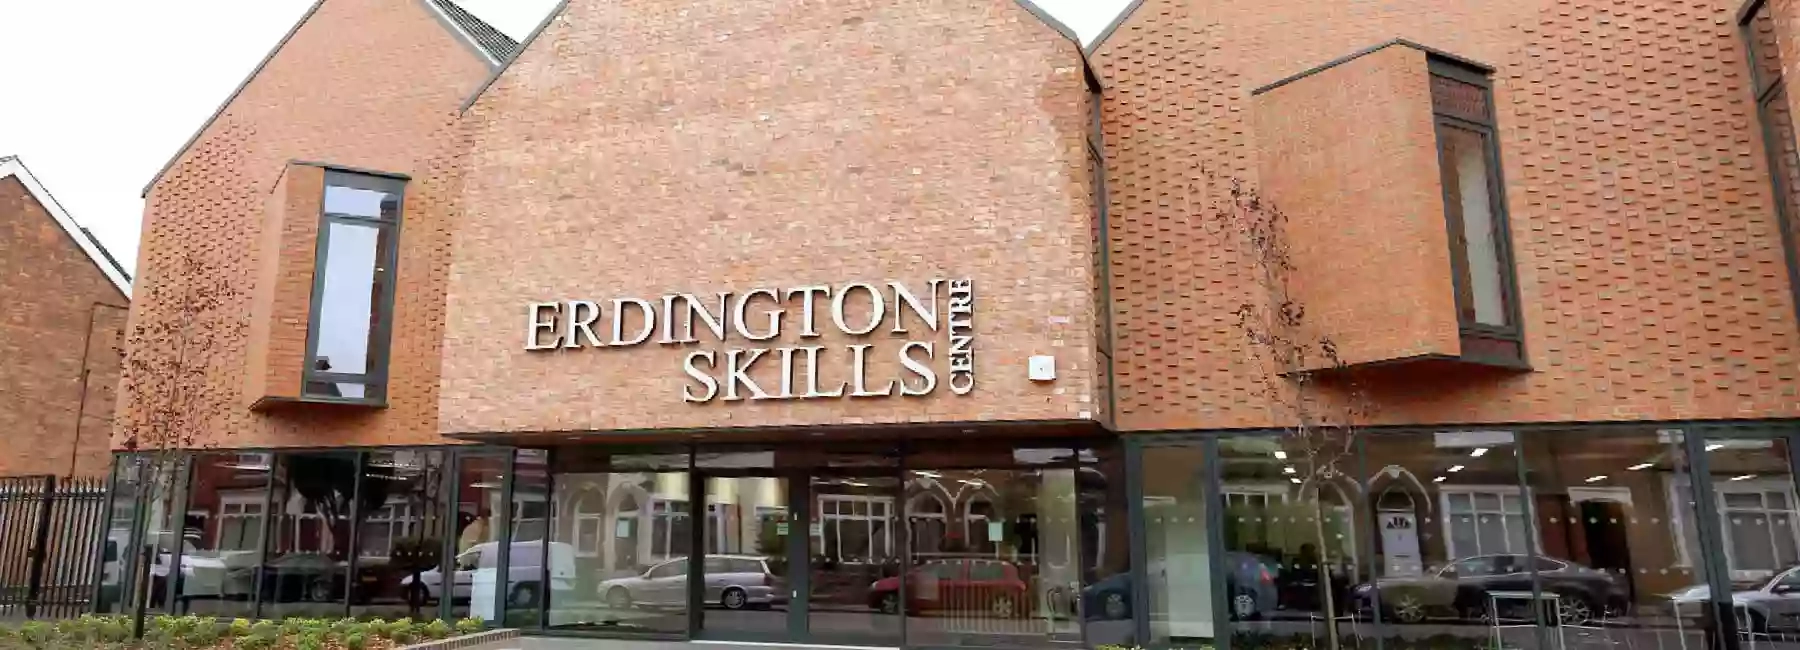 Erdington Skills Centre.